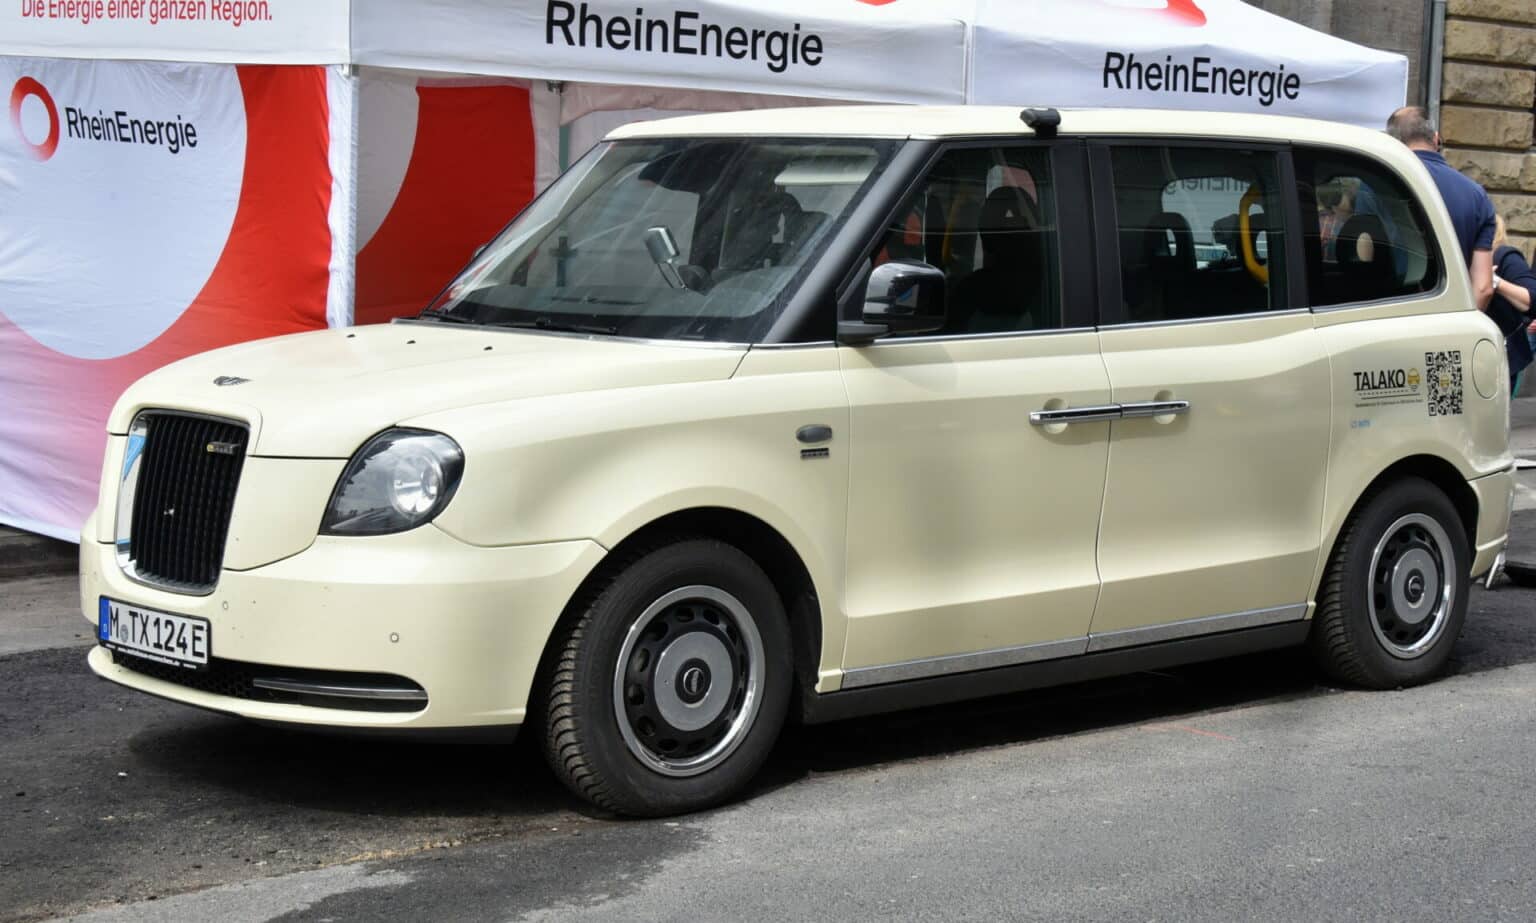 Taxis laden in Köln induktiv